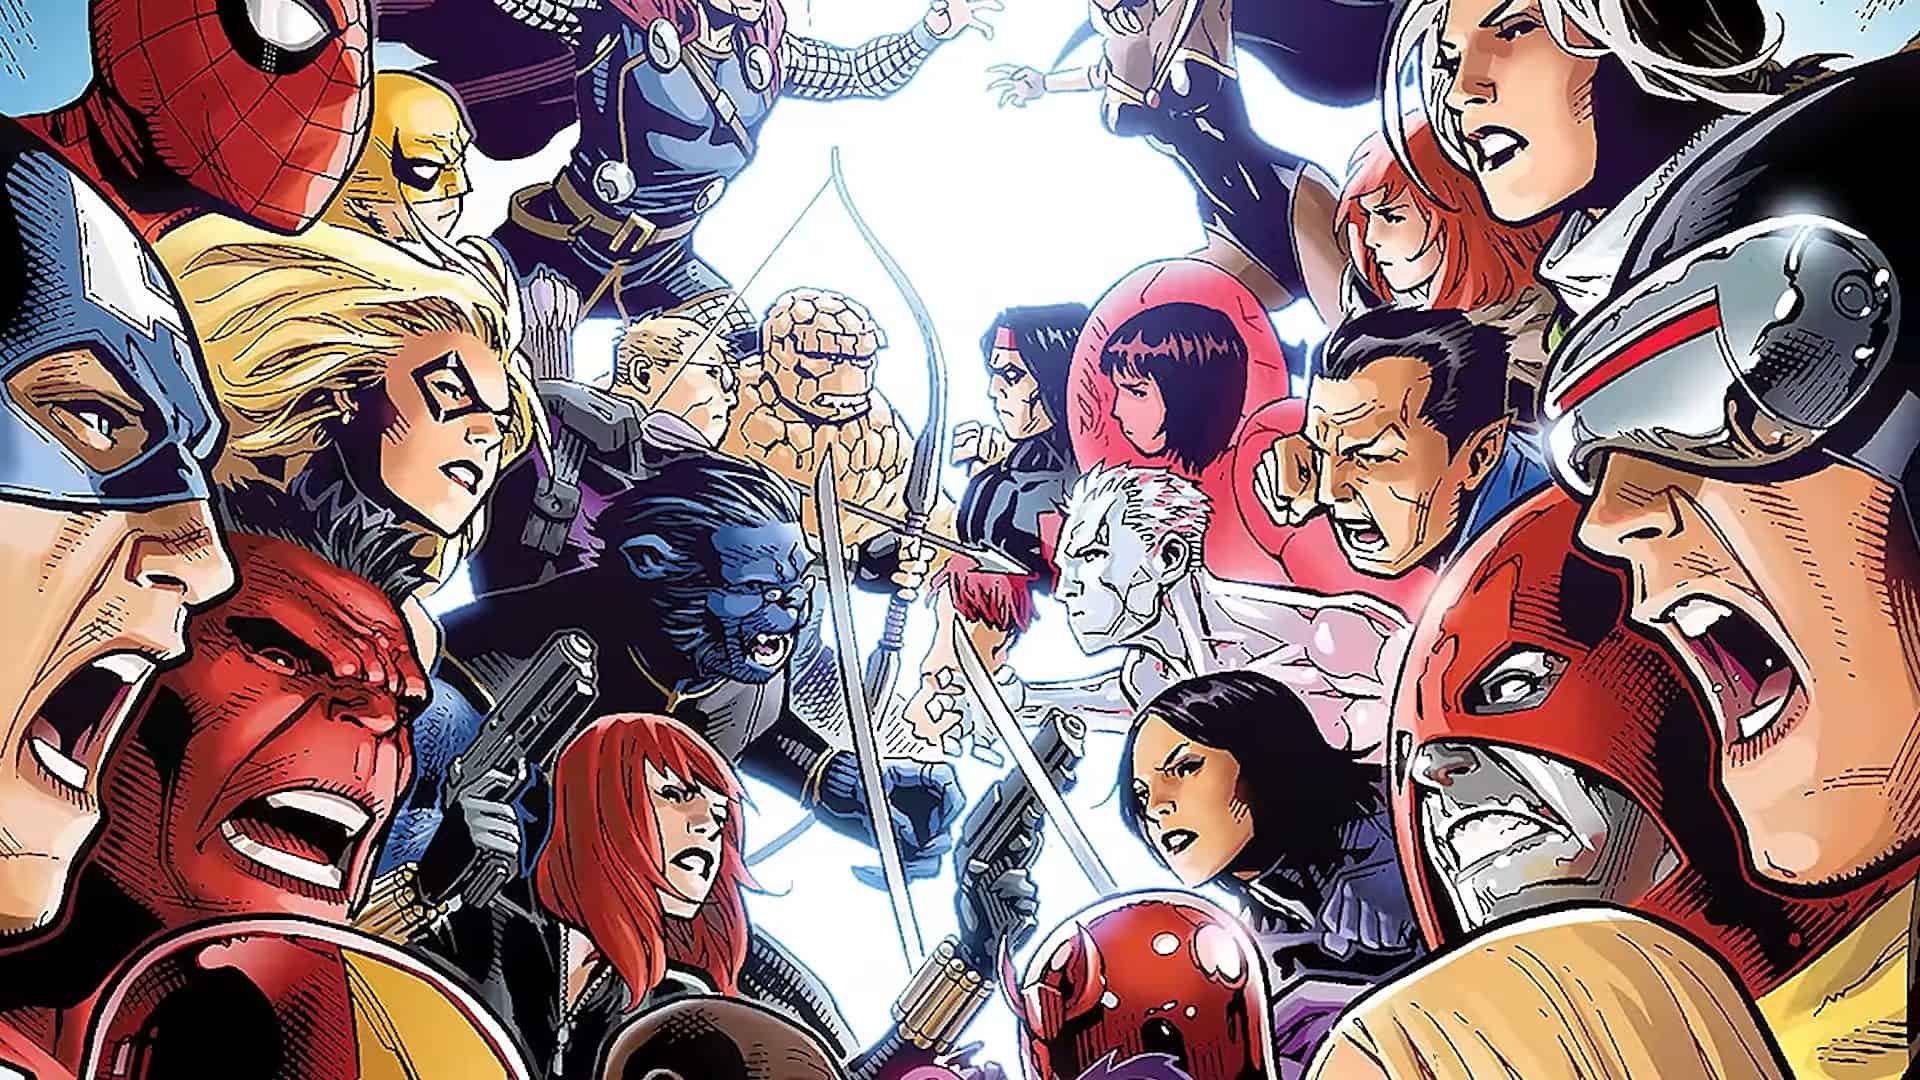 Avengers vs X-Men in comics